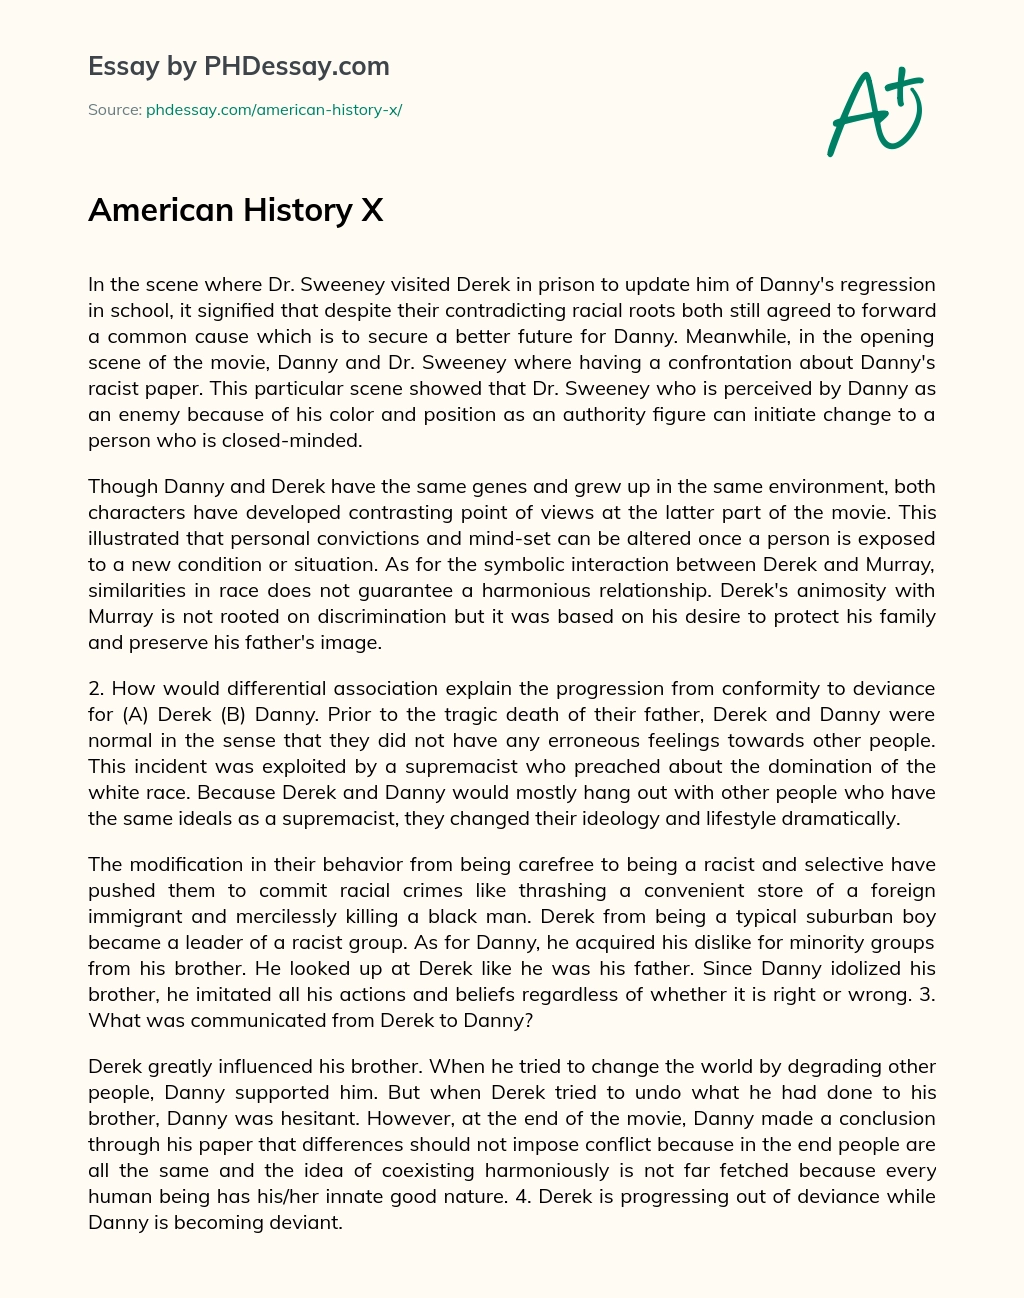 American History X essay